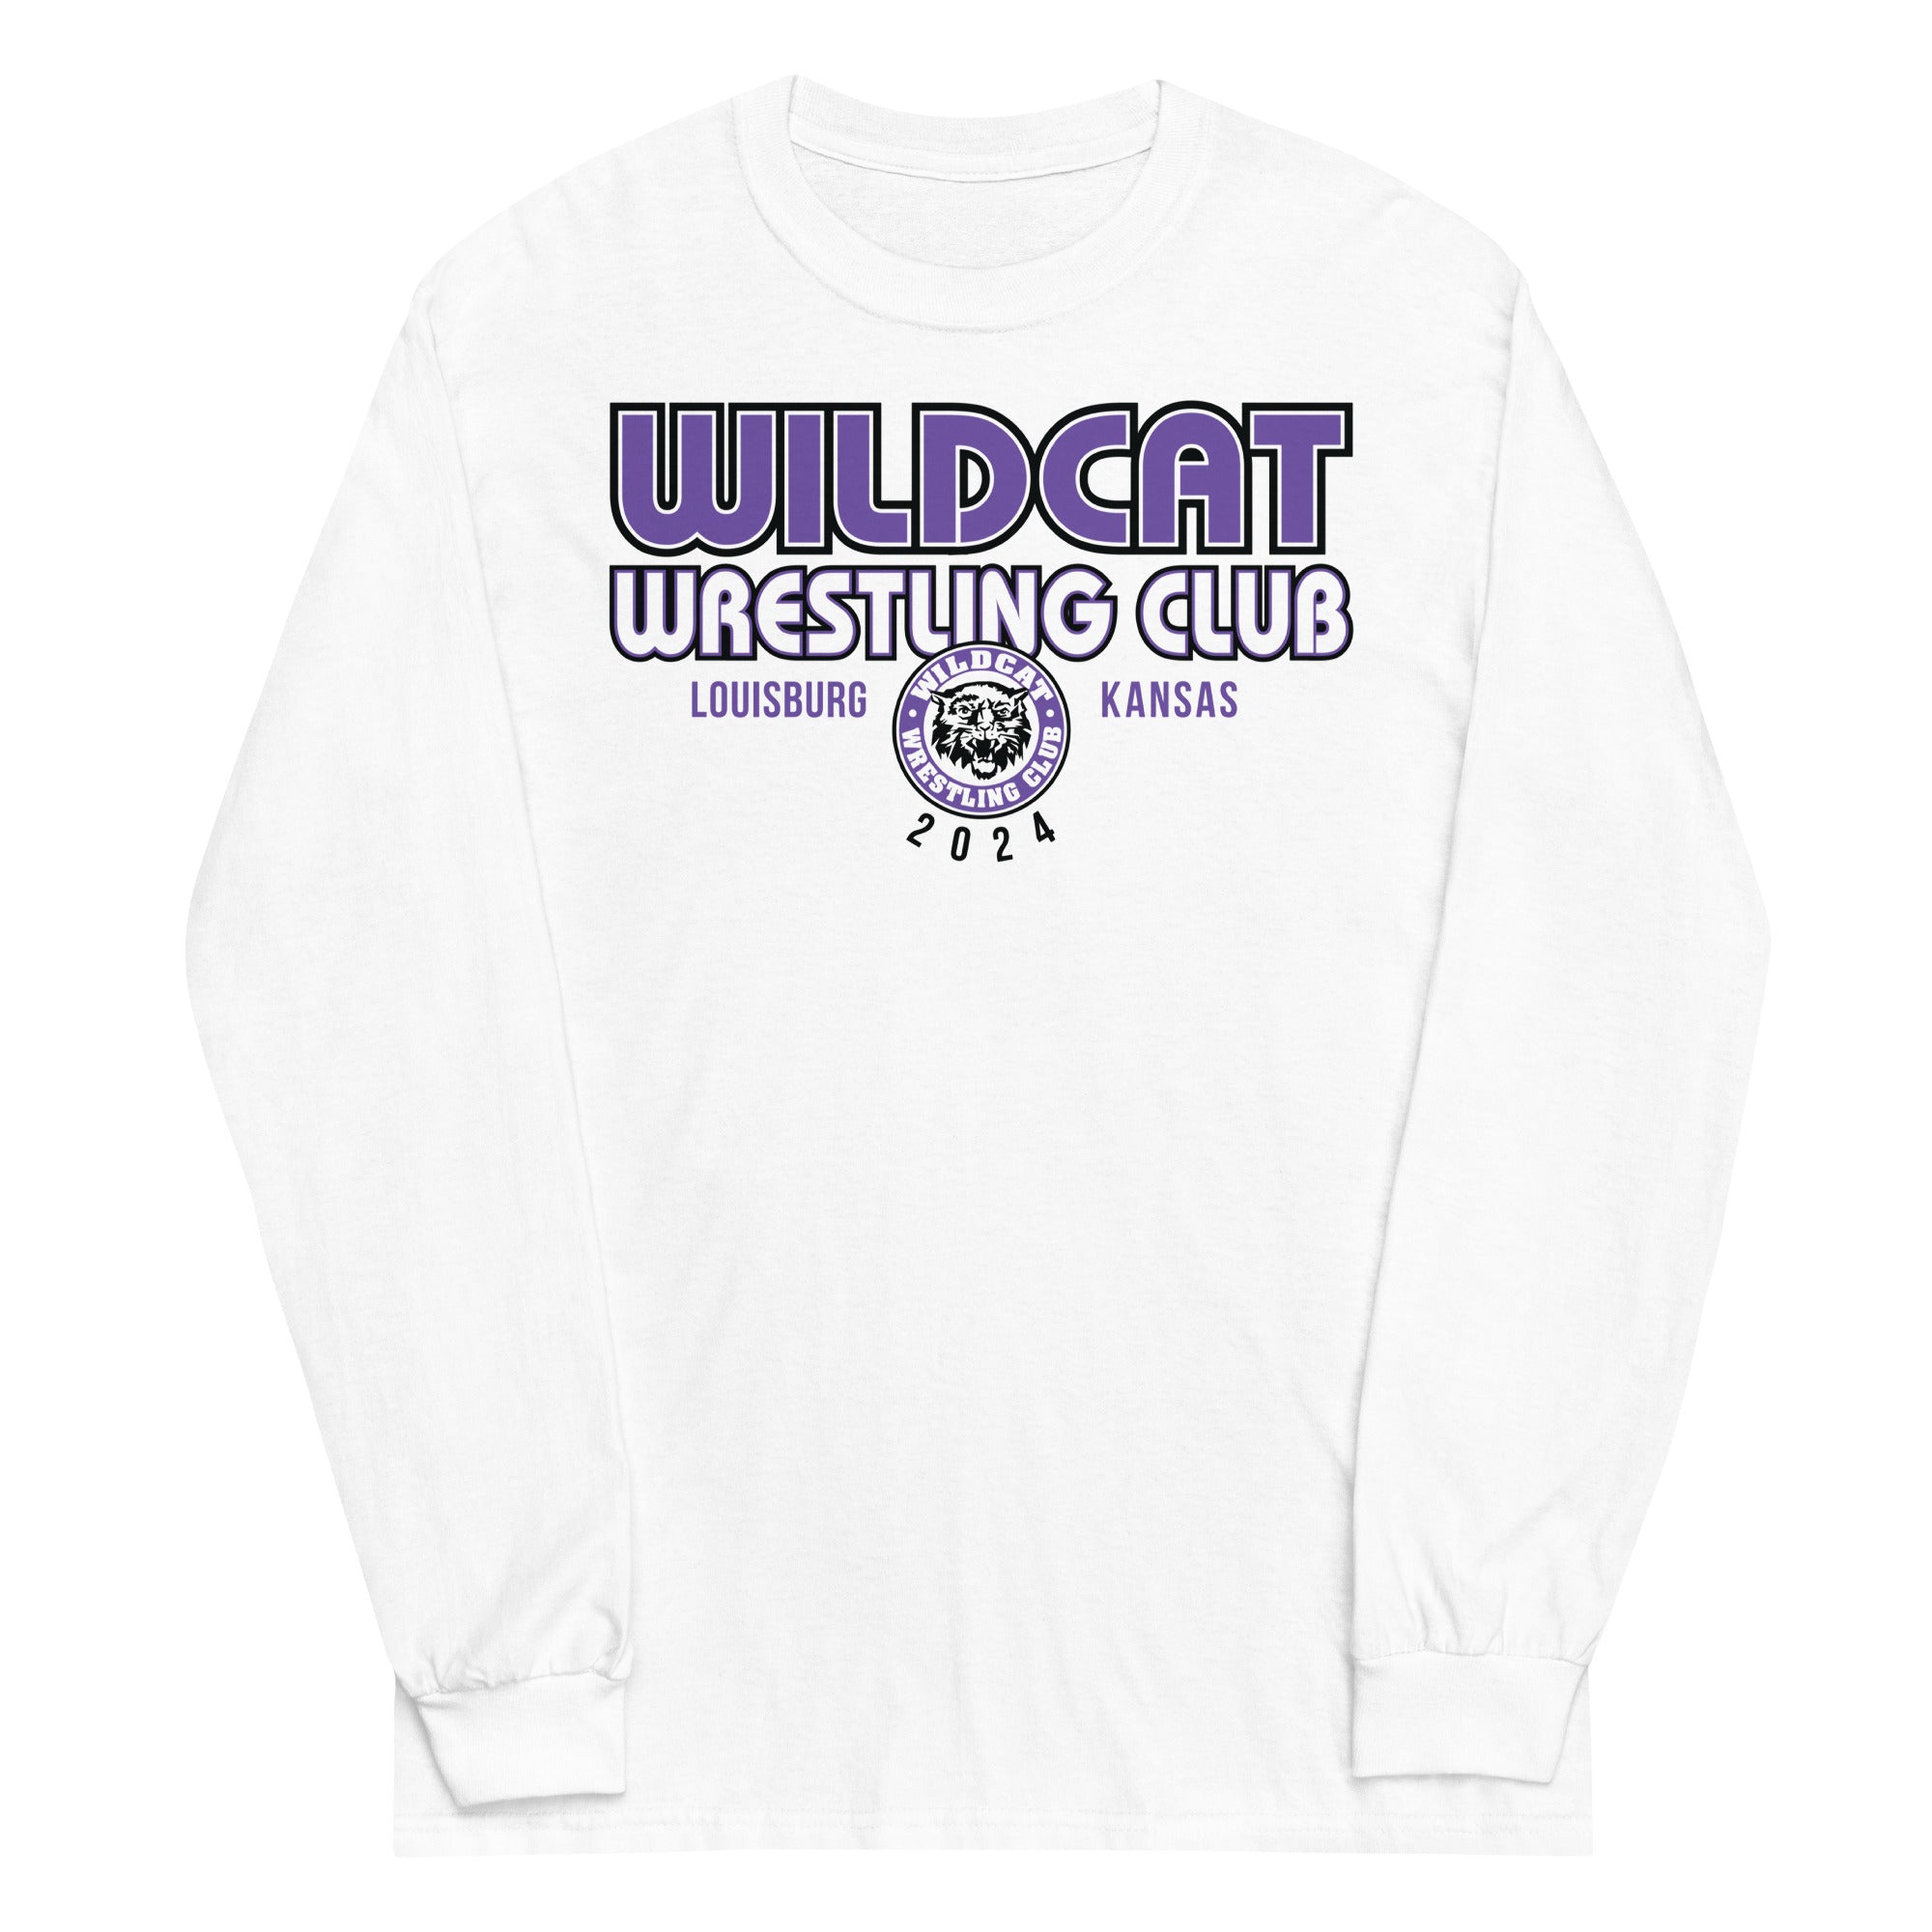 Wildcat Wrestling Club (Louisburg) - Front Design Only - Men’s Long Sleeve Shirt